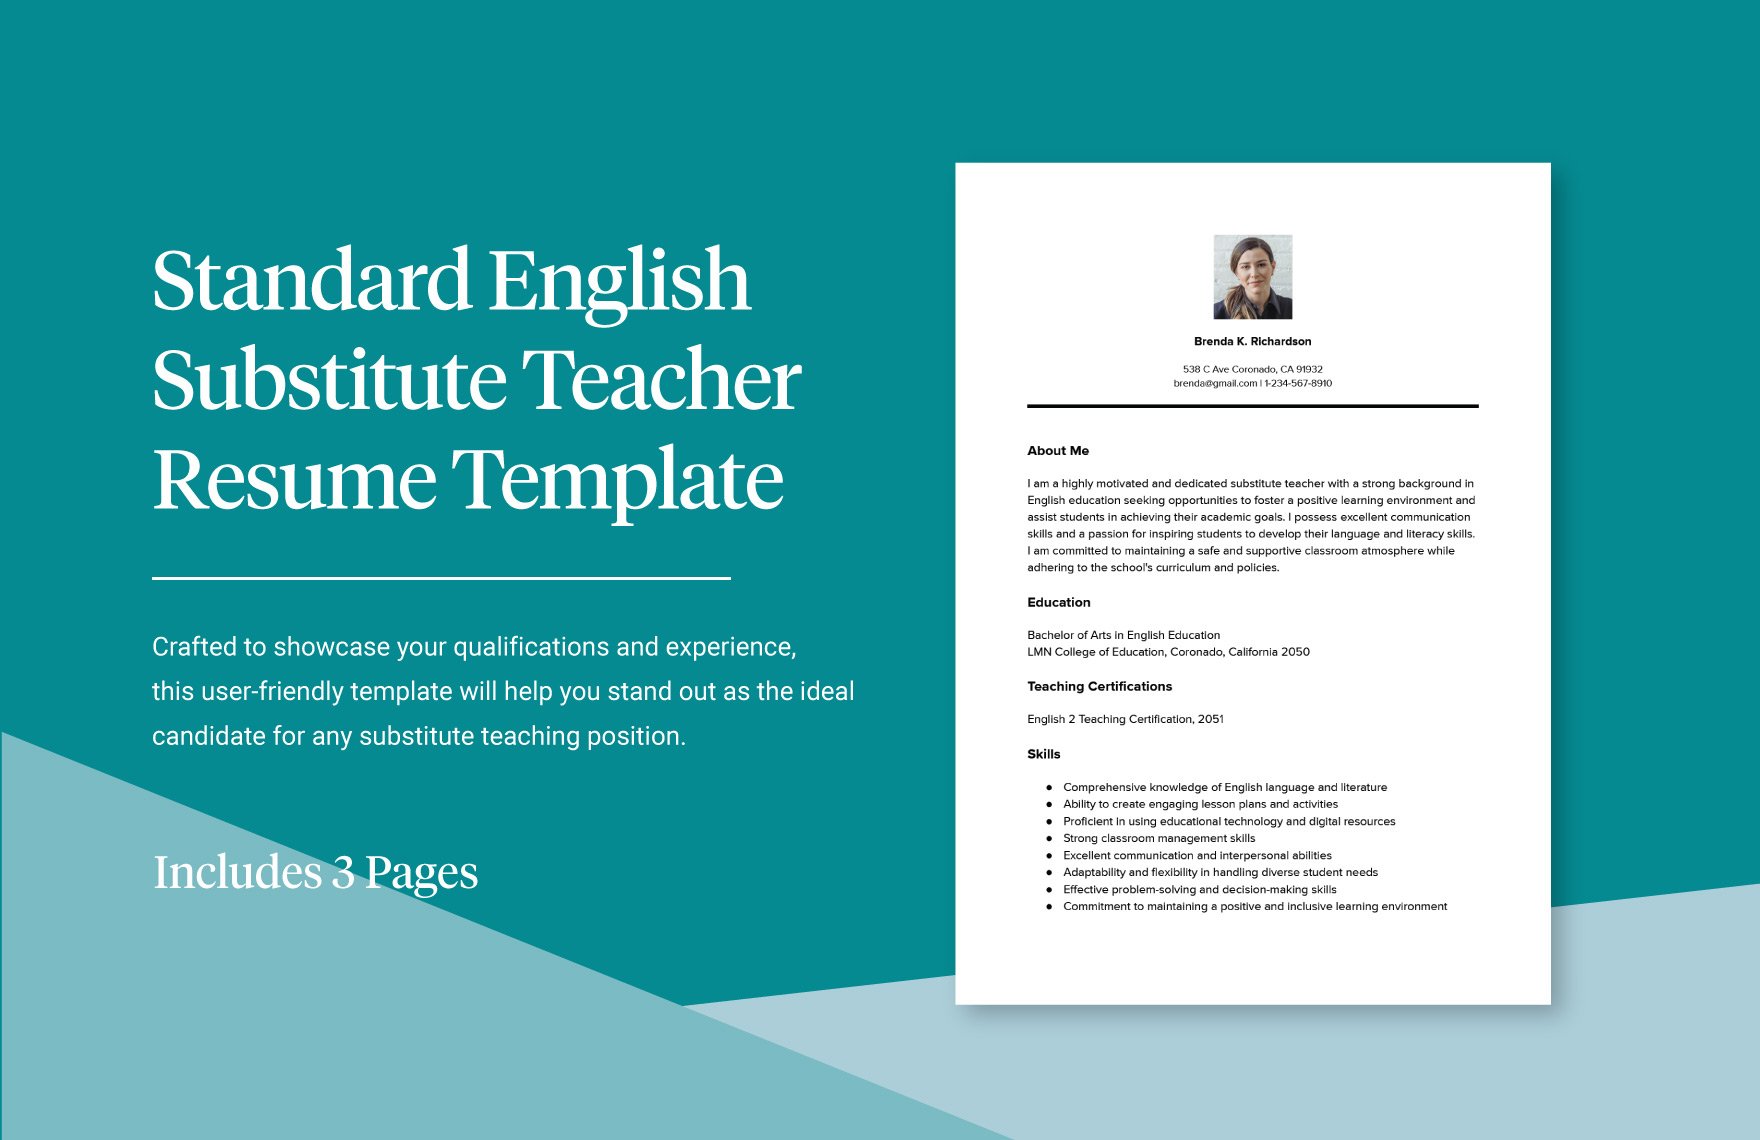 Standard English Substitute Teacher Resume Template